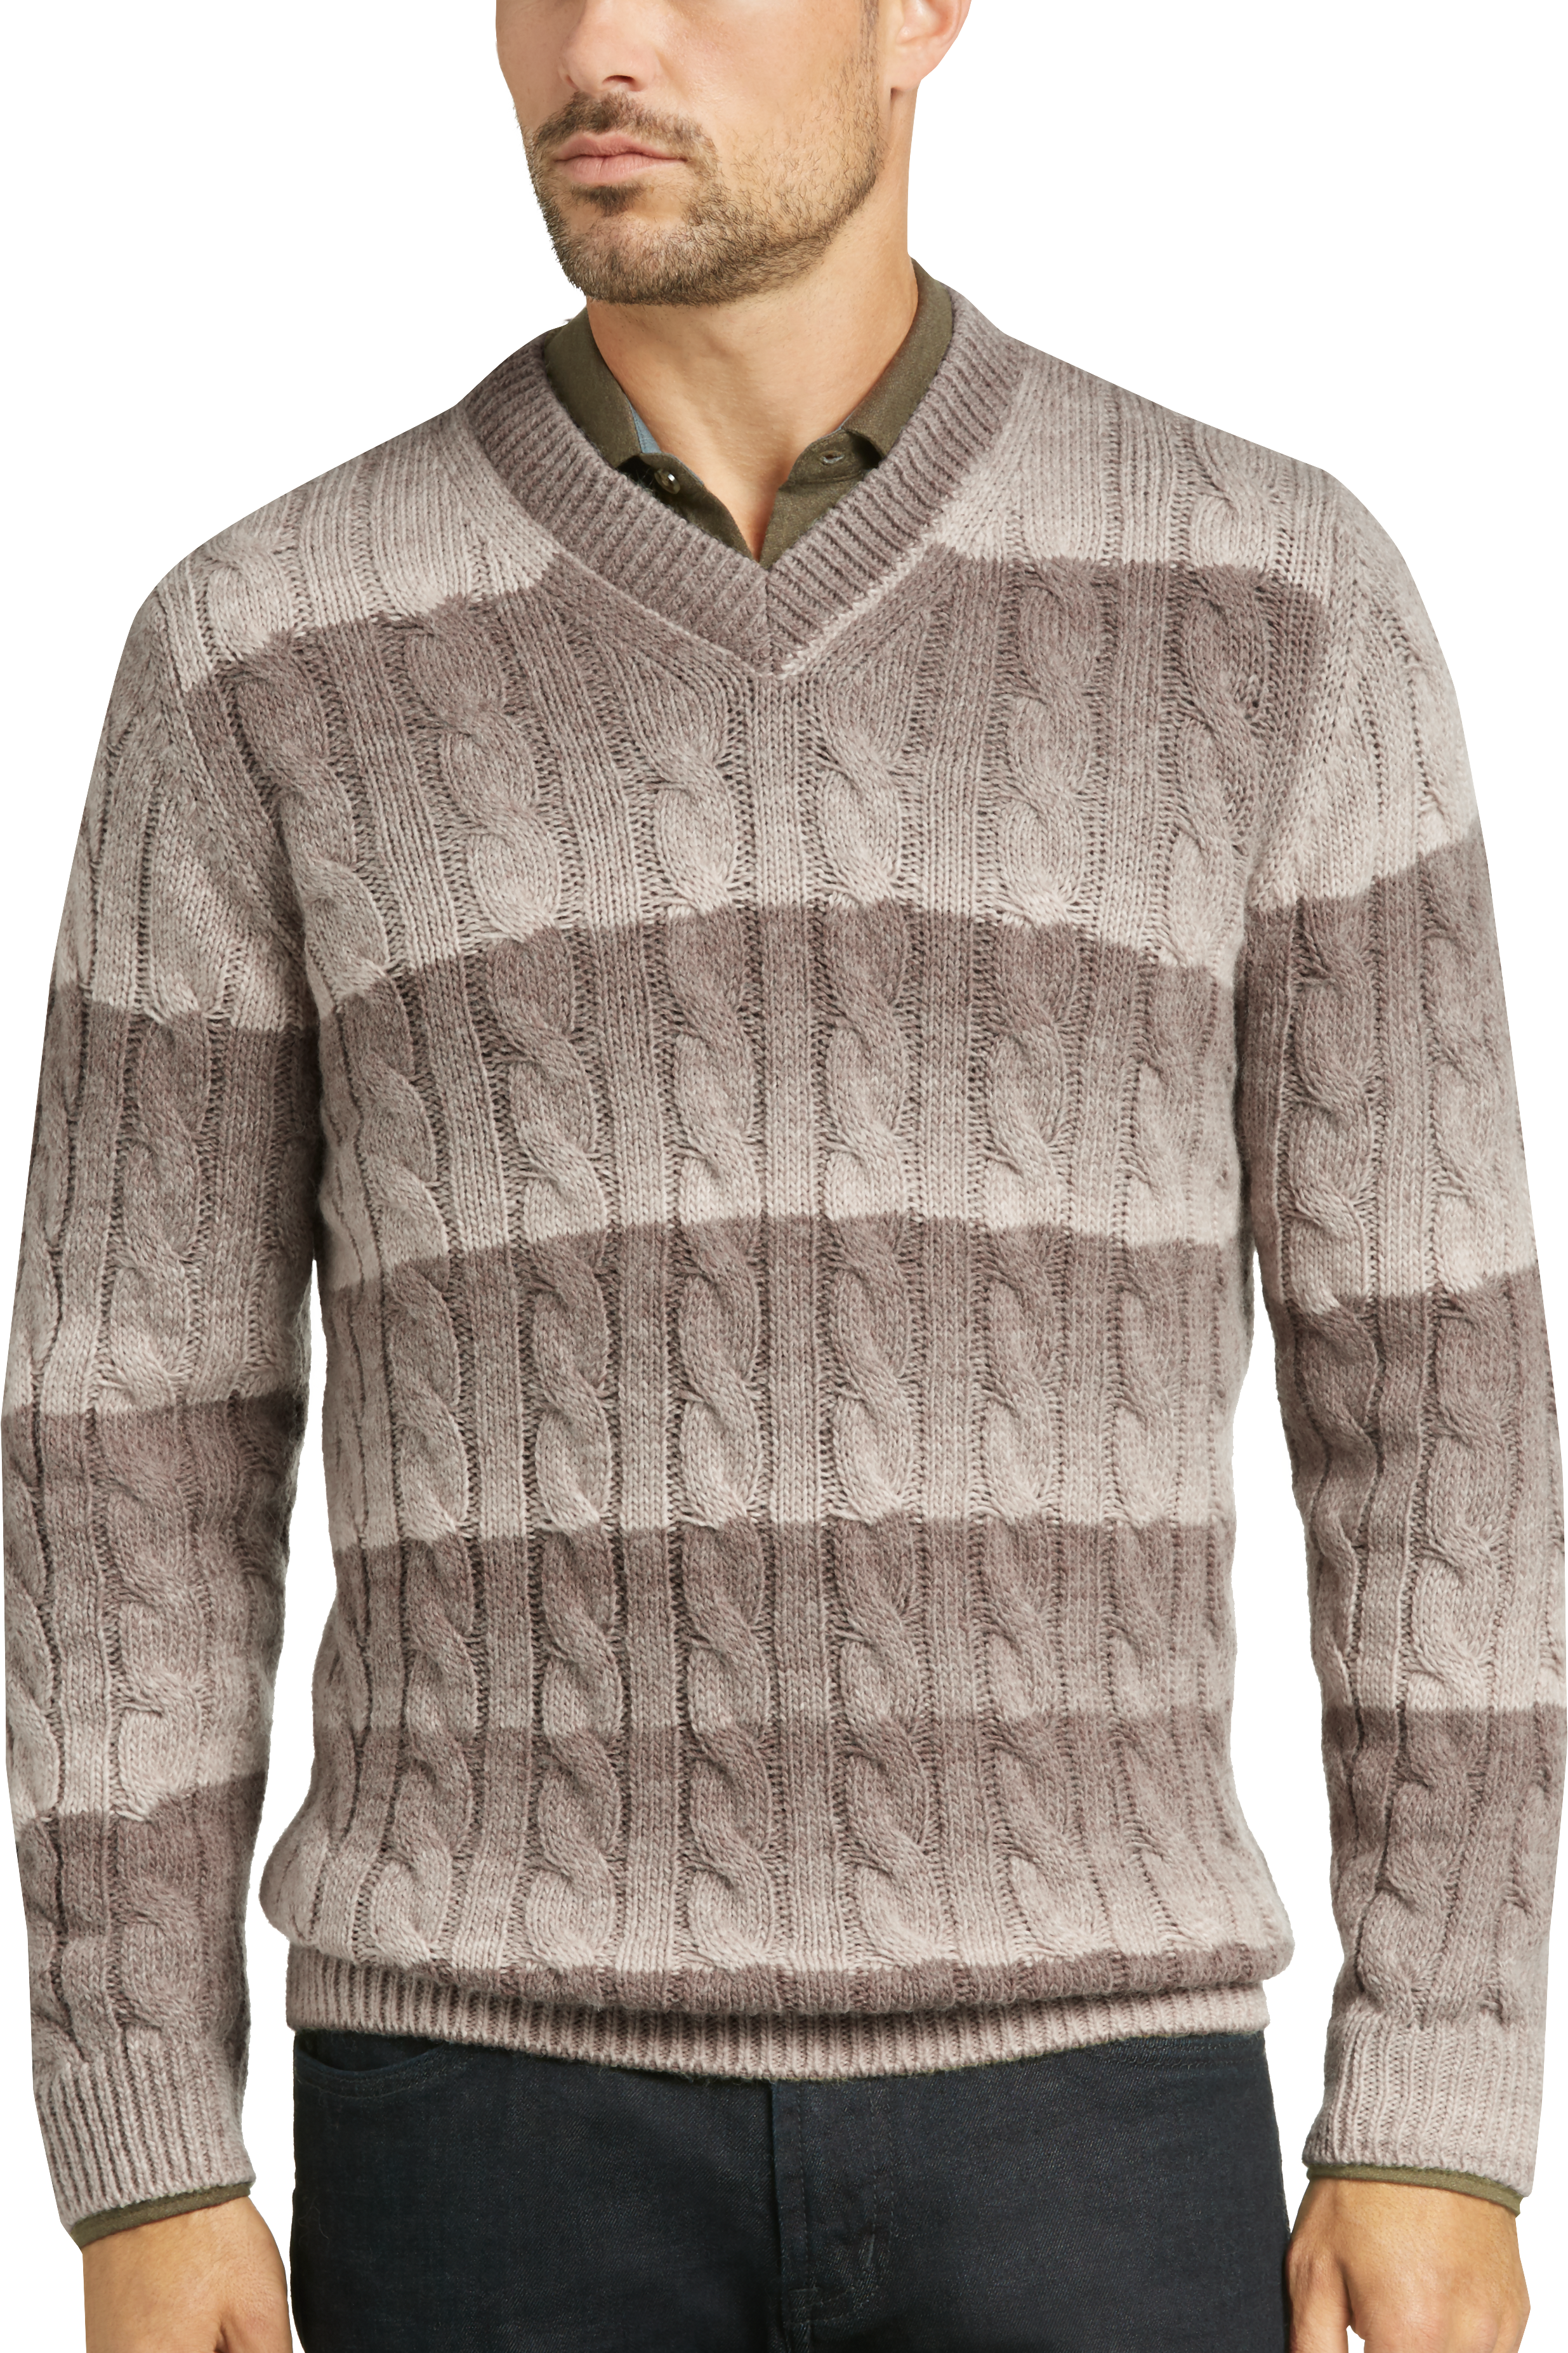 Joseph Abboud Mushroom Brown V-Neck Sweater - Men's Sweaters | Men's ...